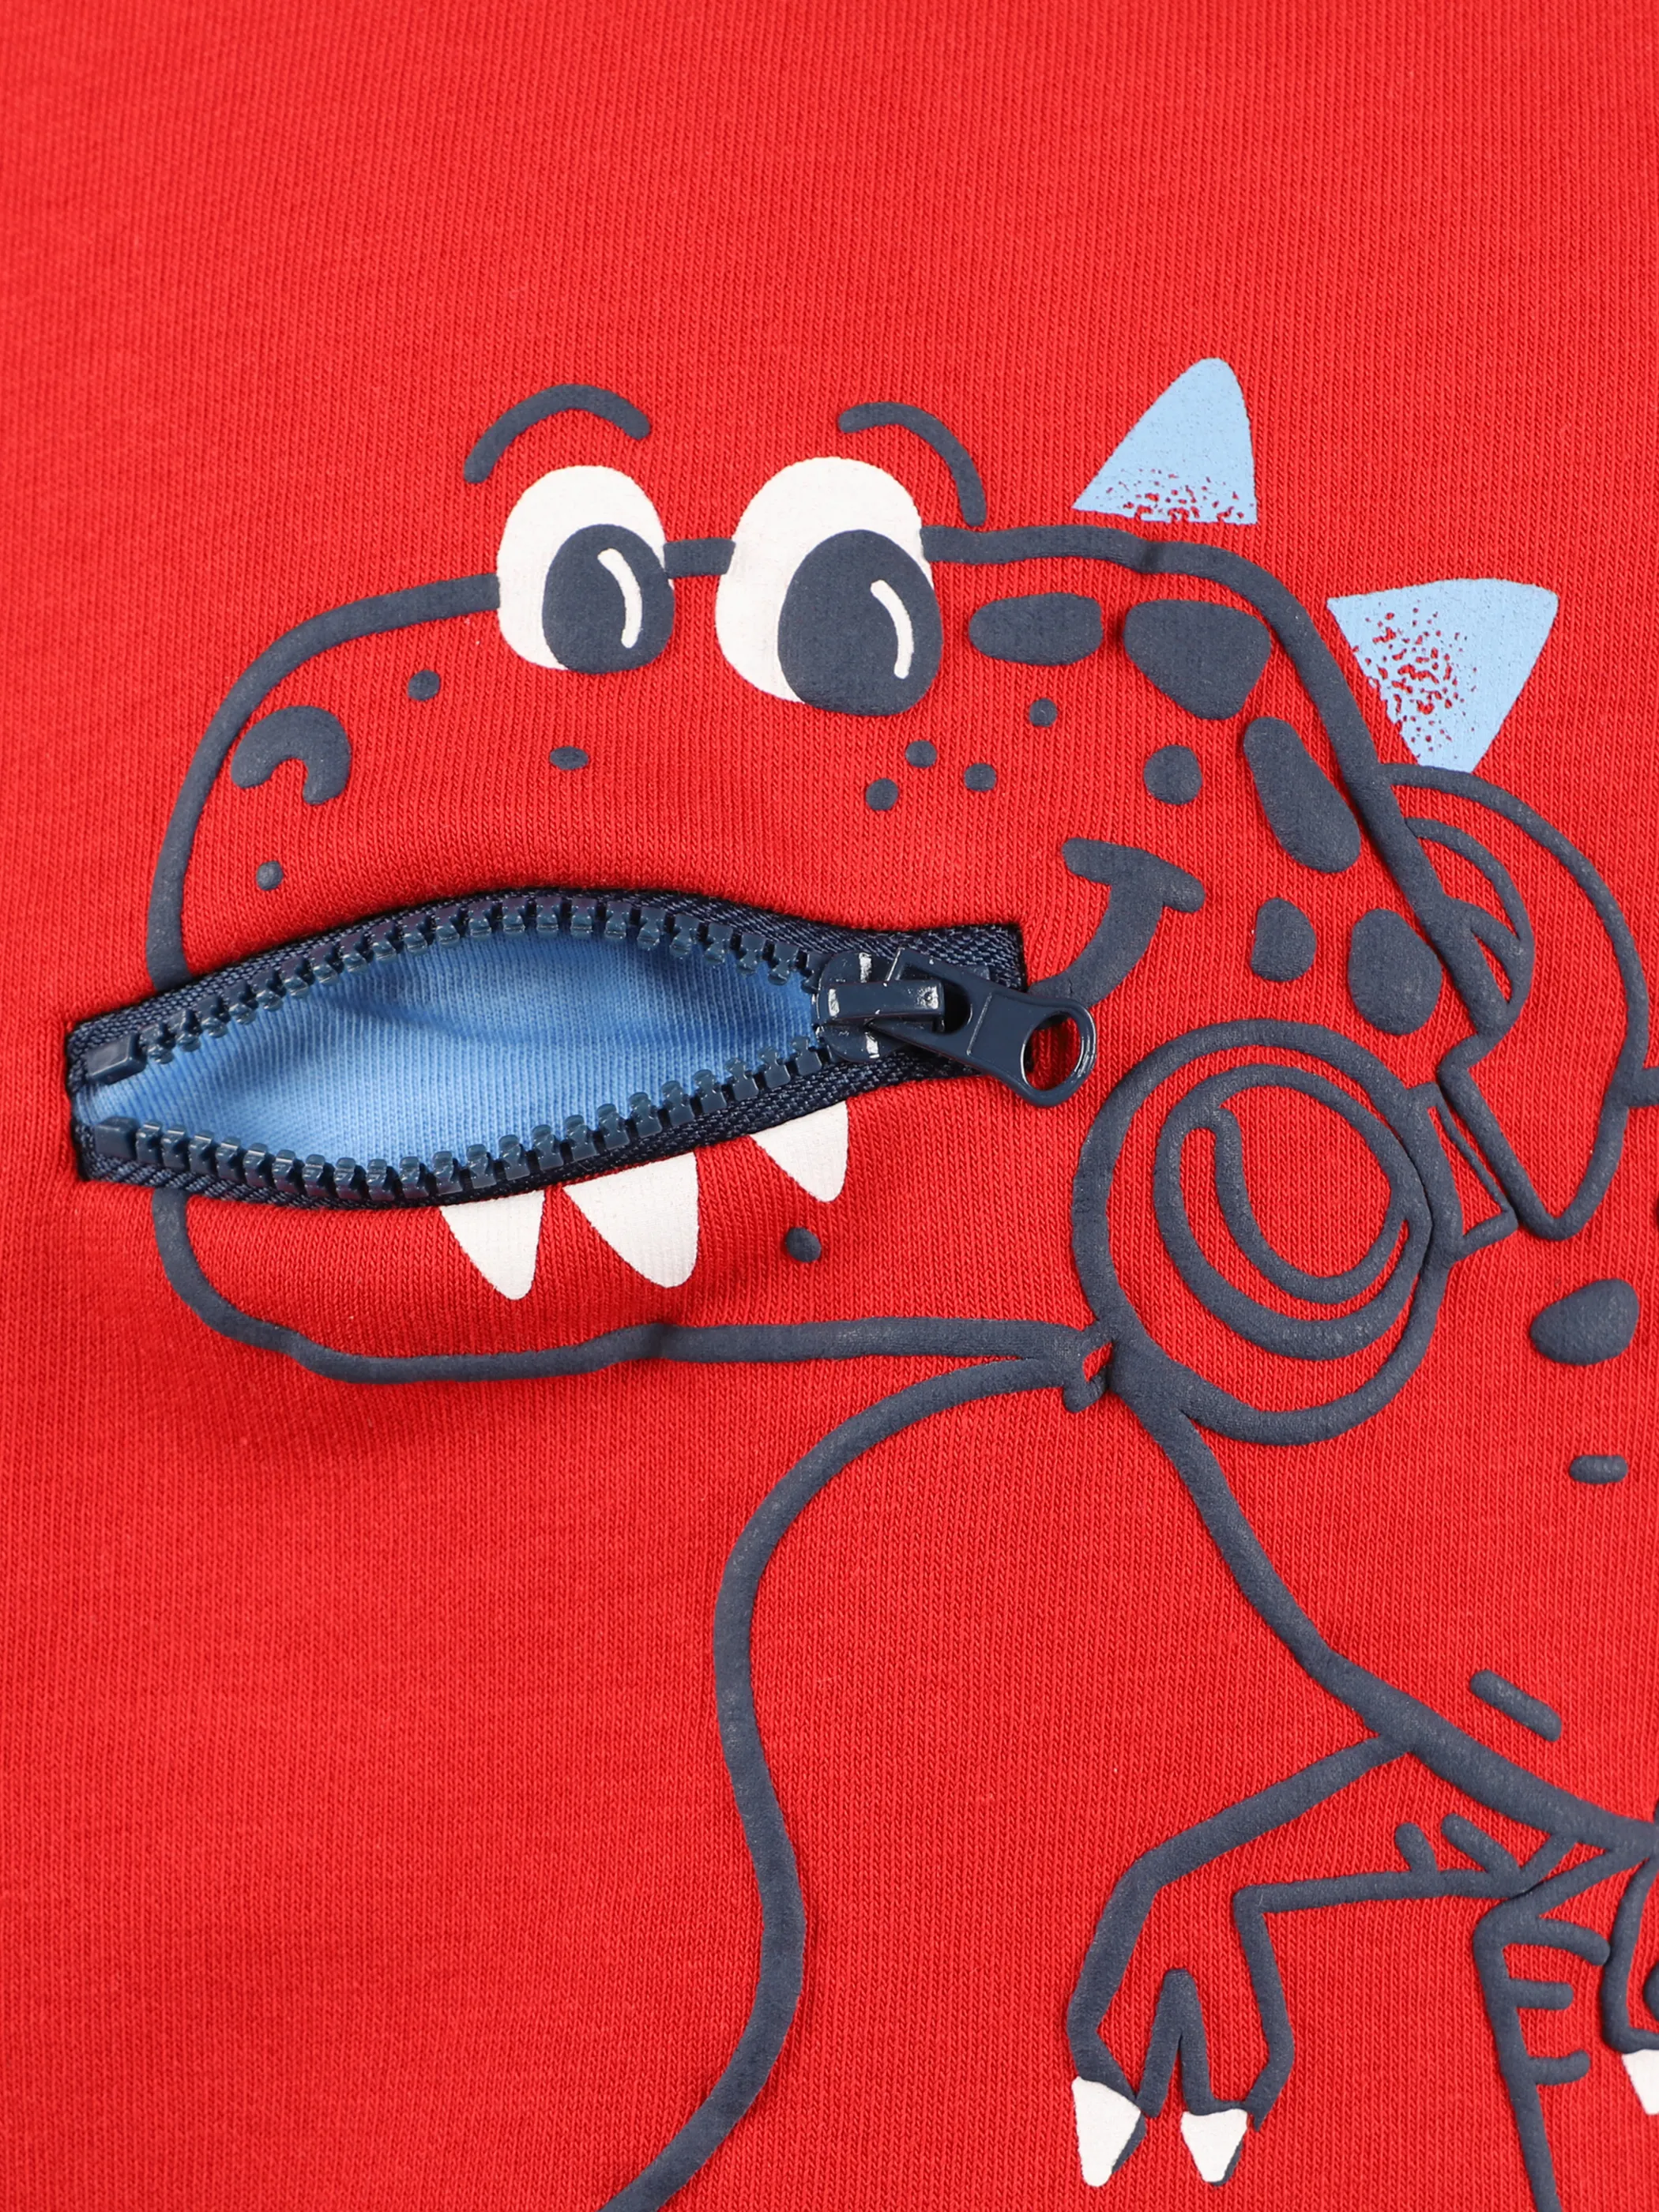 Stop + Go KJ Sweater in rot und blau mit Dino Applikation Rot 881559 ROT 3